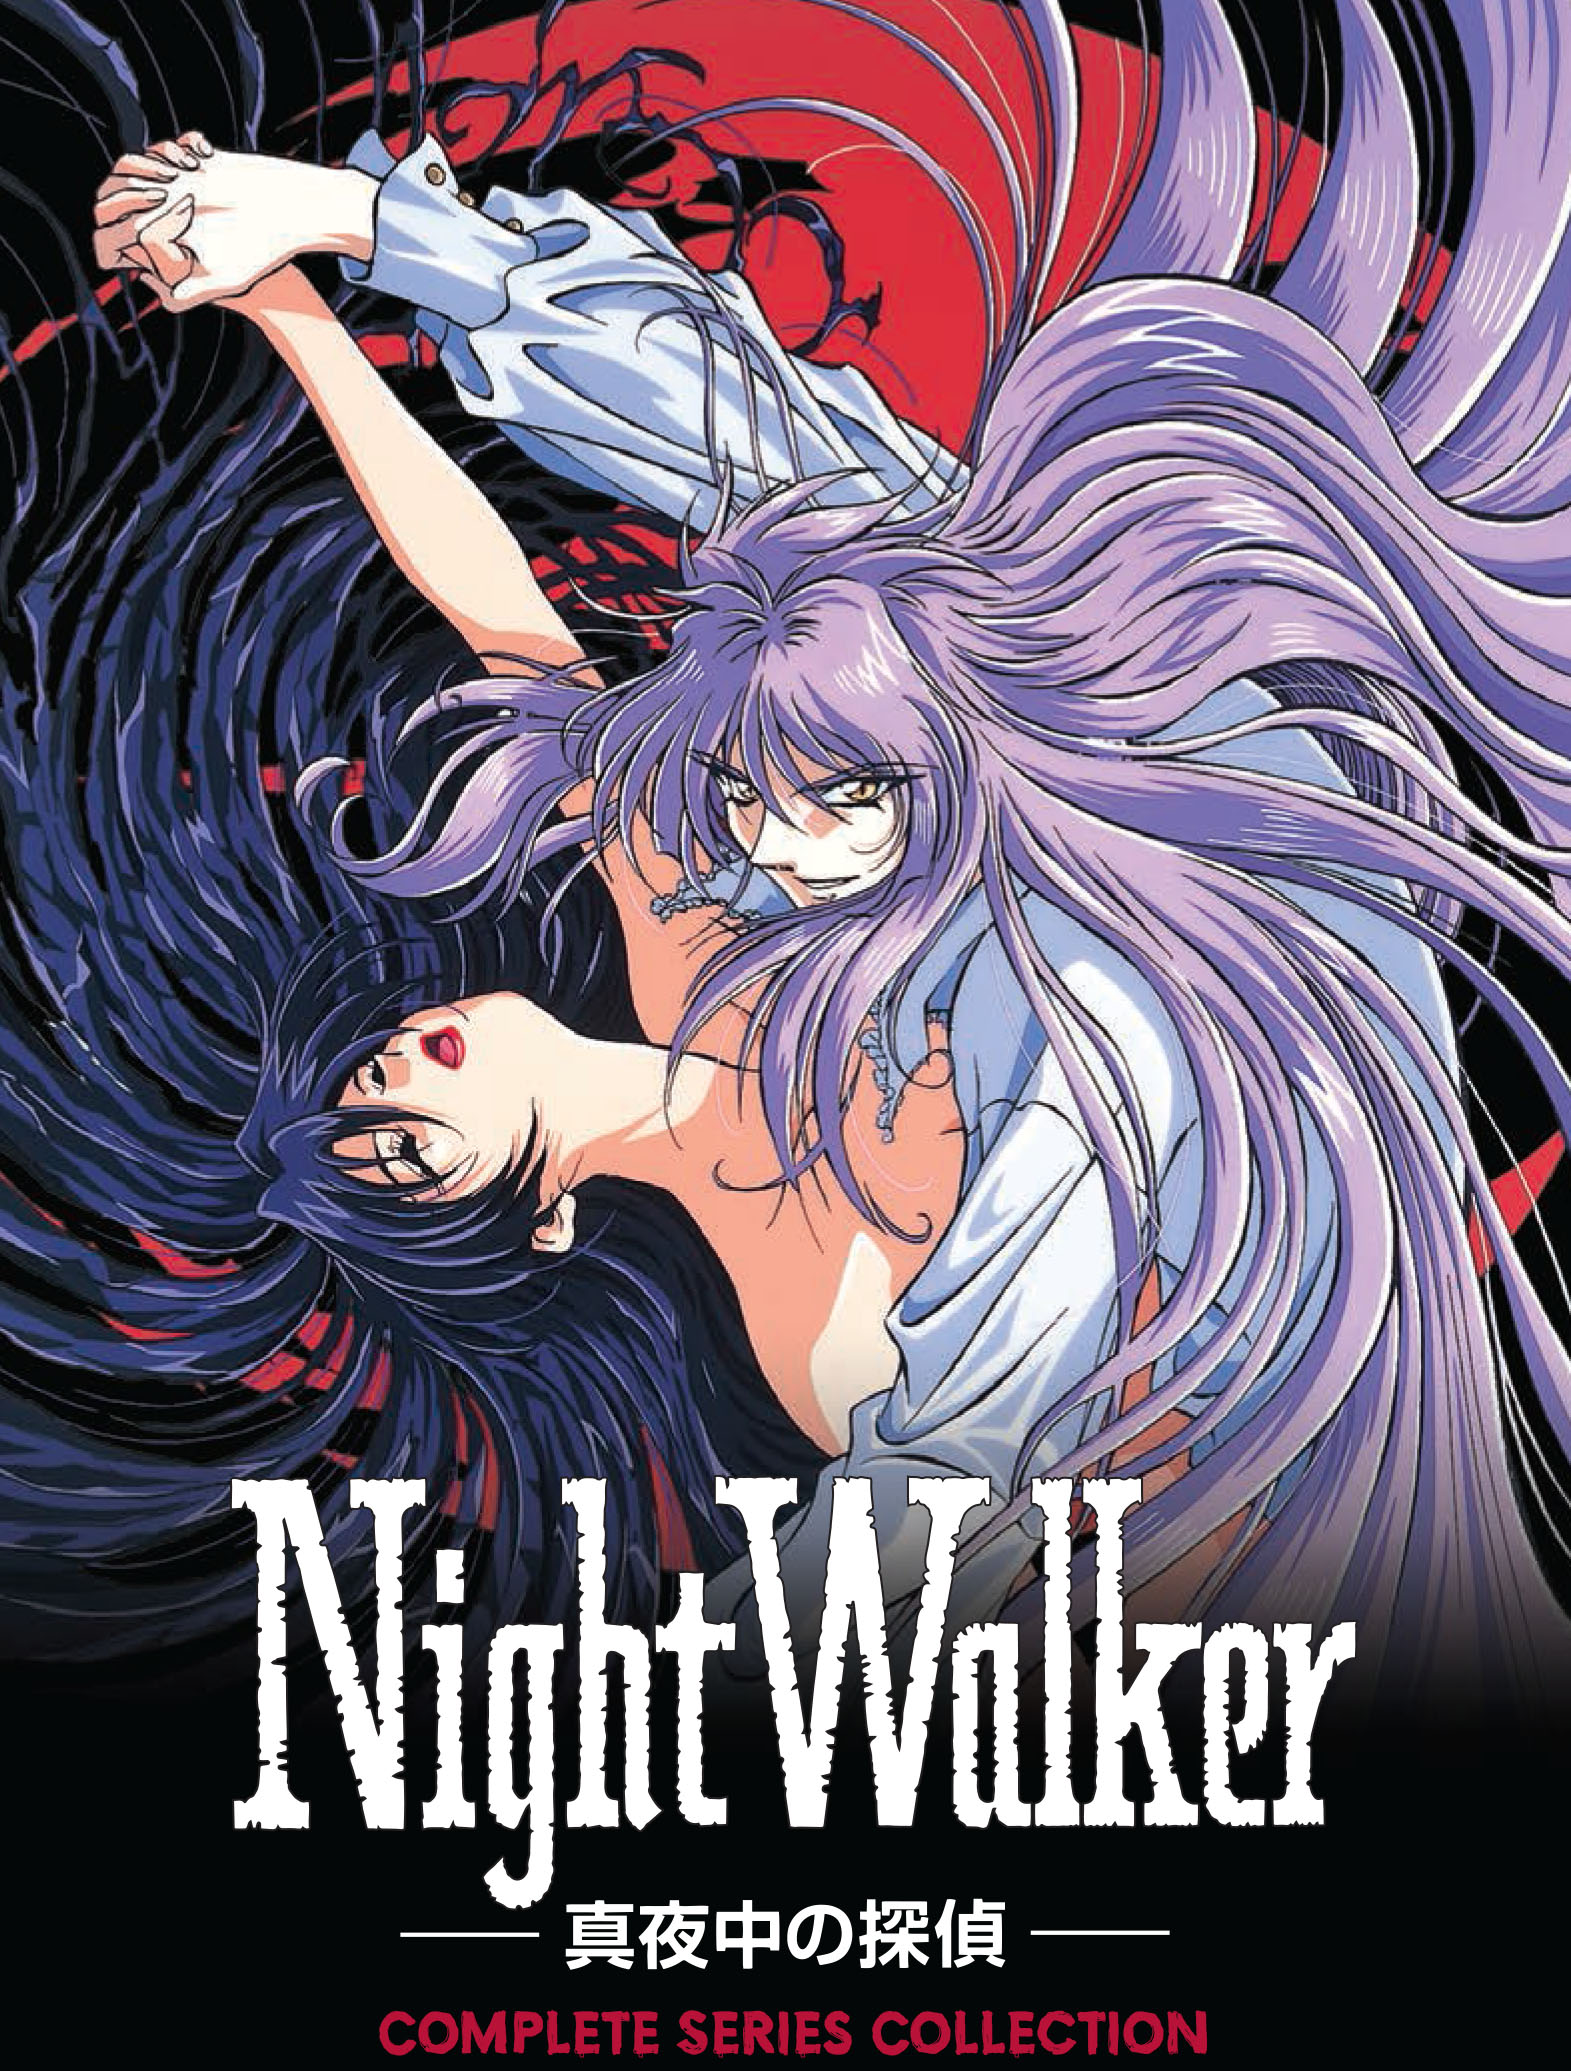 Nightwalker the Midnight Detective DVD image count 0